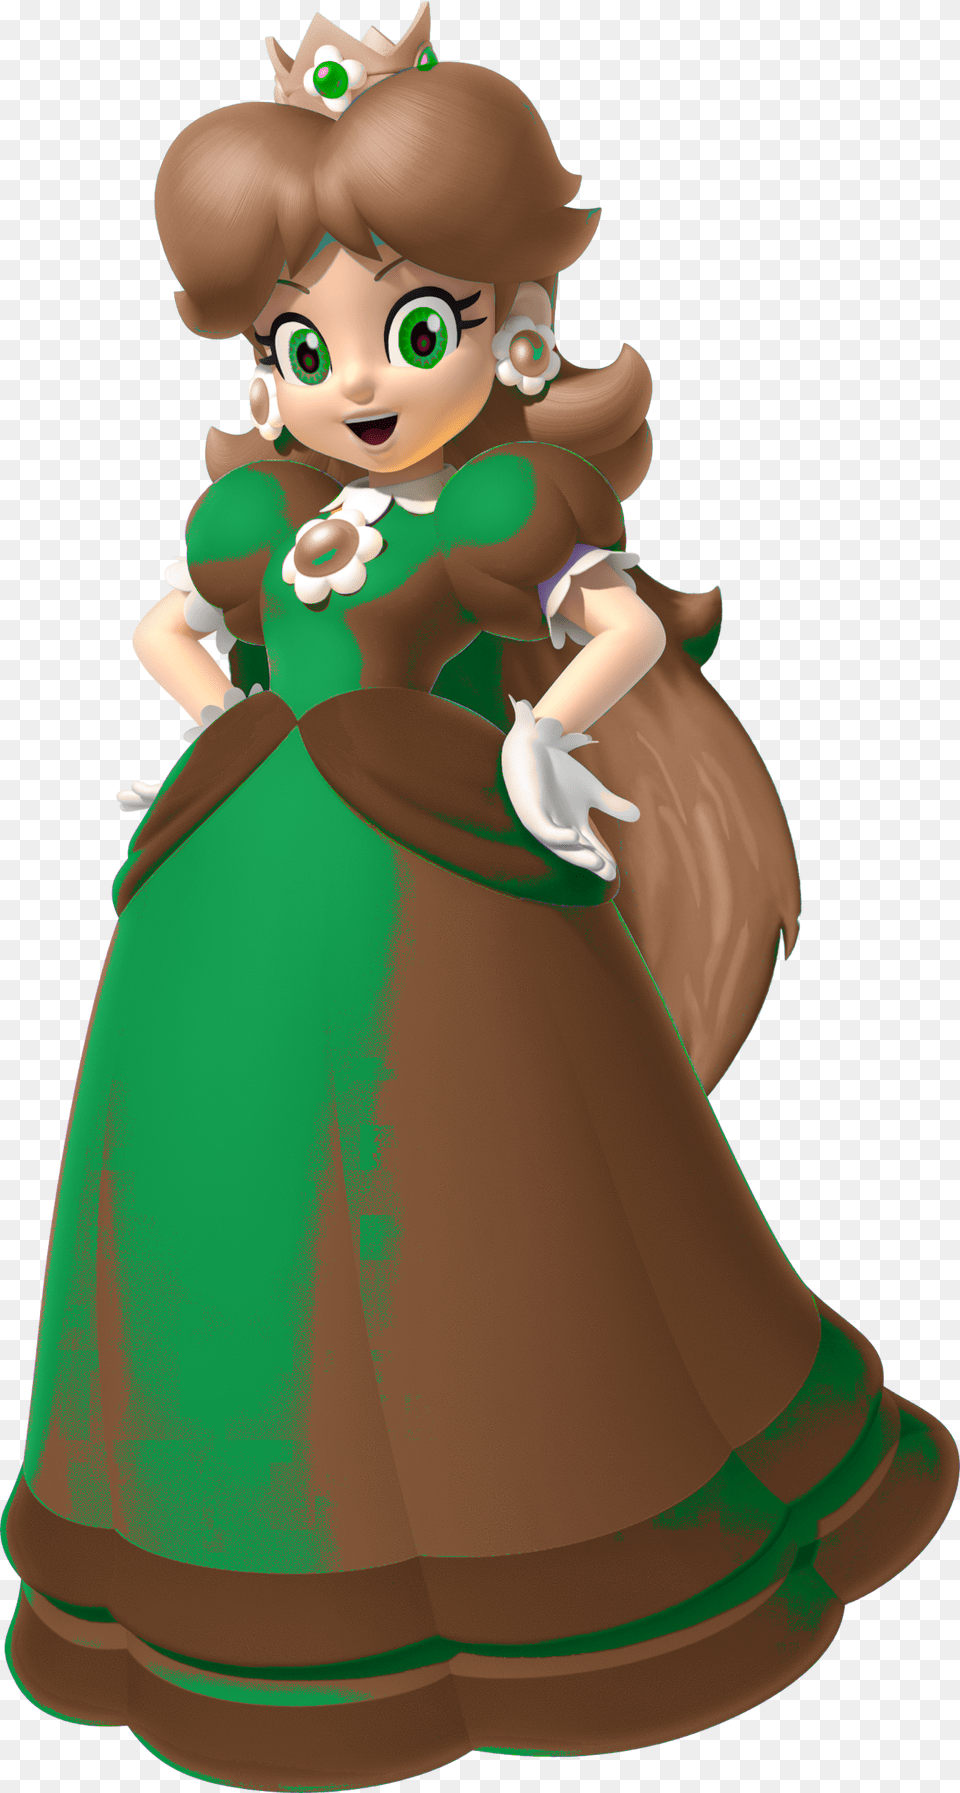 Emerald Princess Nintendo Amiibo Daisy Wii U, Fashion, Clothing, Dress, Toy Free Png